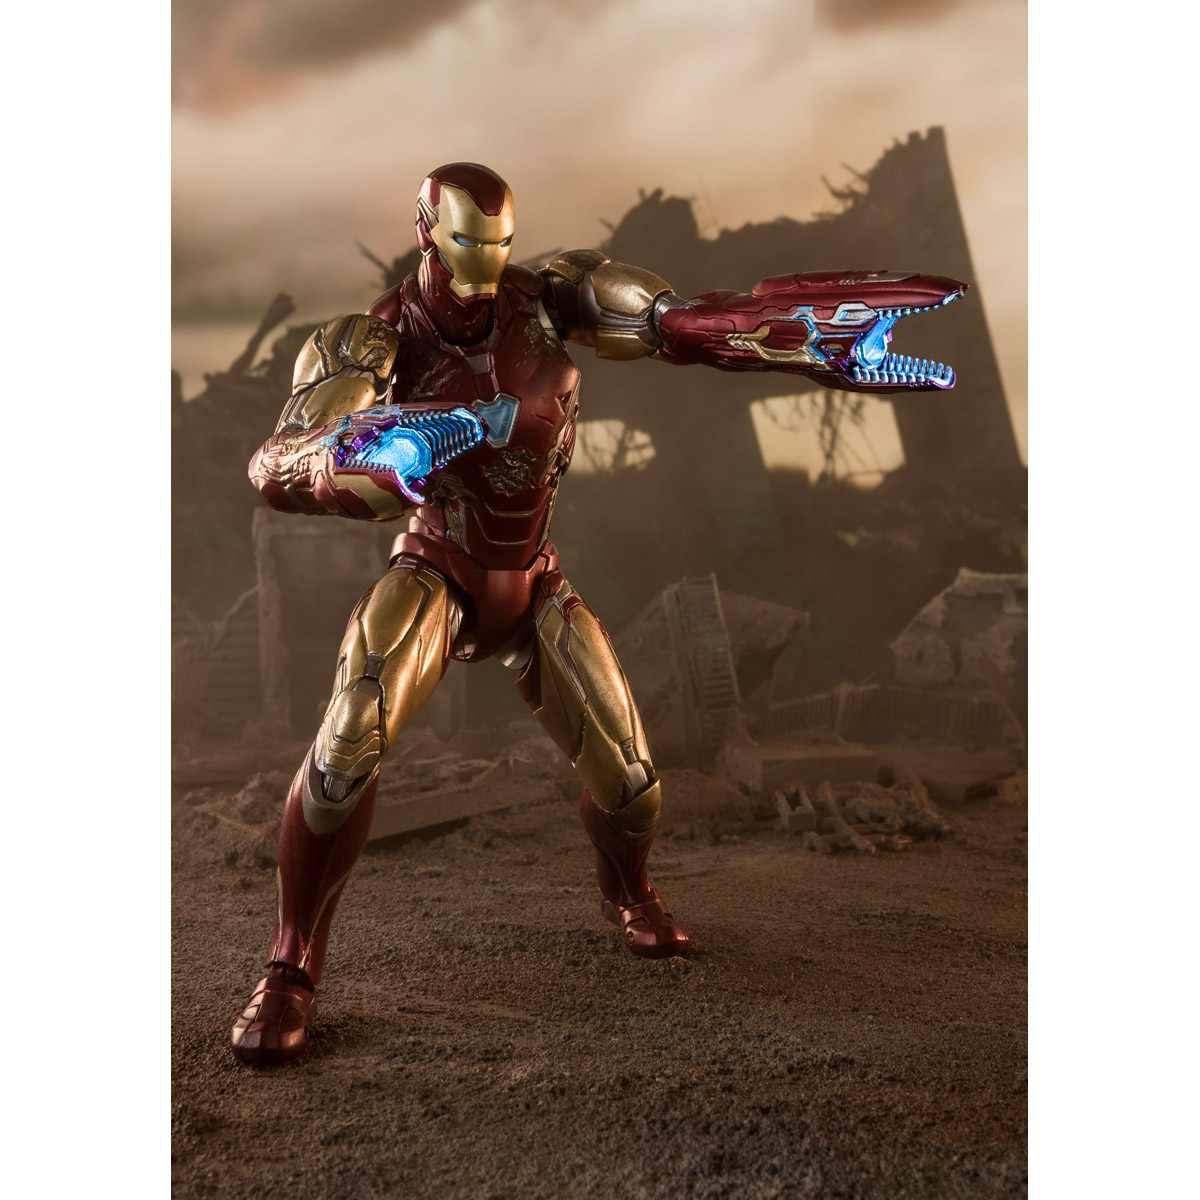 S.H.Figuarts Iron Man Mk-85 -《I AM IRON MAN》 EDITION (Avengers: Endgame)